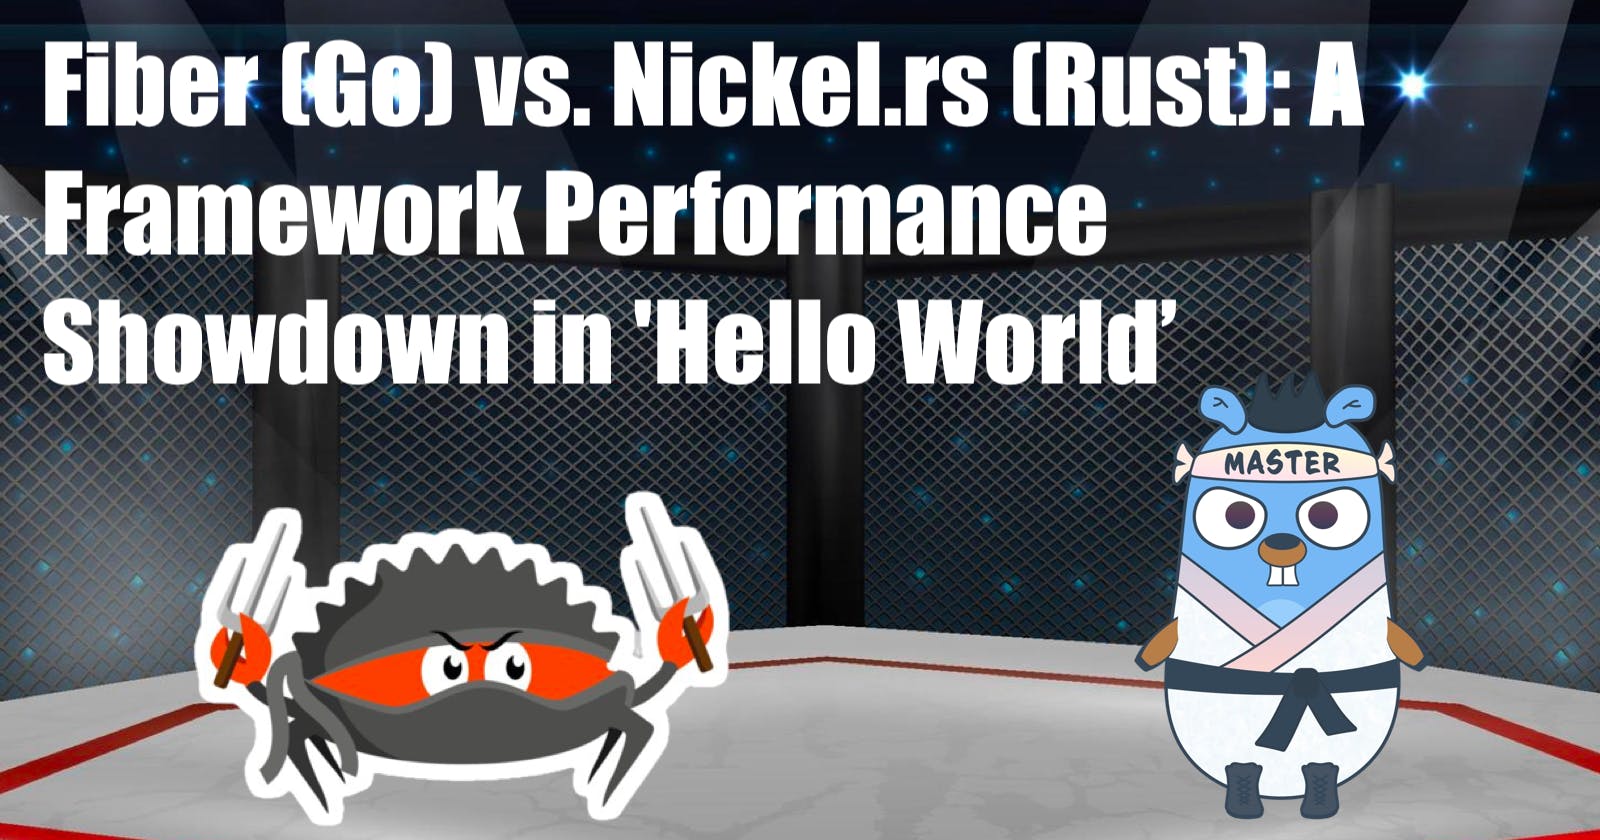 Fiber (Go) vs. Nickel.rs (Rust): A Performance Showdown in 'Hello World'